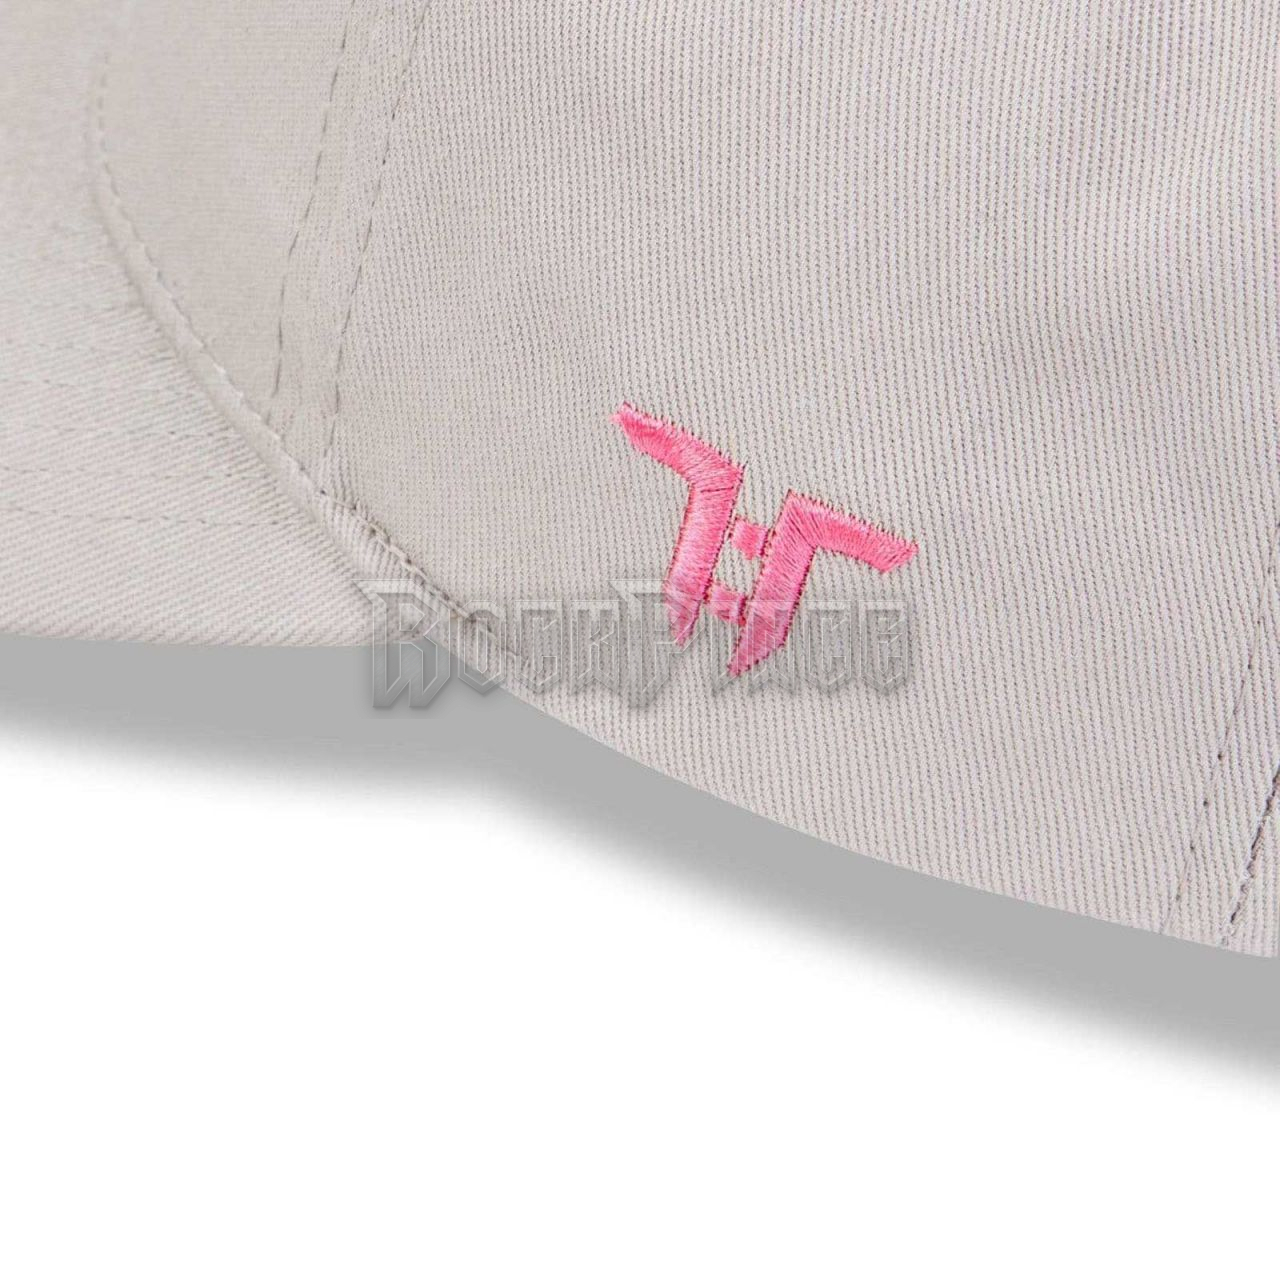 Tokyo Time - TT Core Pink Logo - snapback sapka - TOKYOSBCAP57G